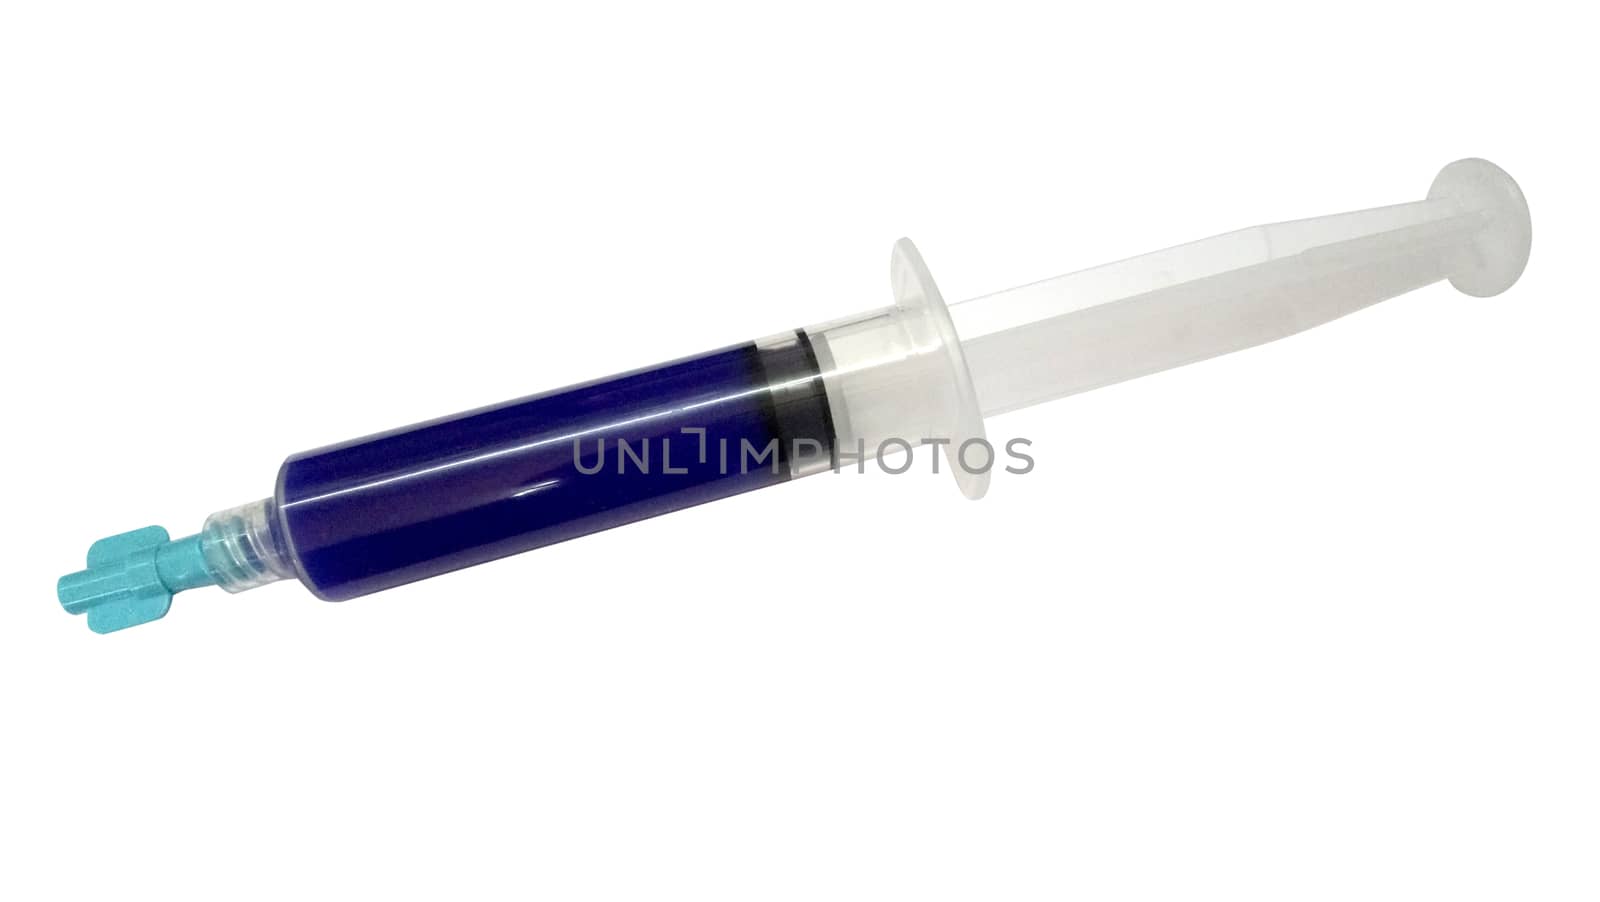 Phosphoric acid etching gel syringe by imwaltersy